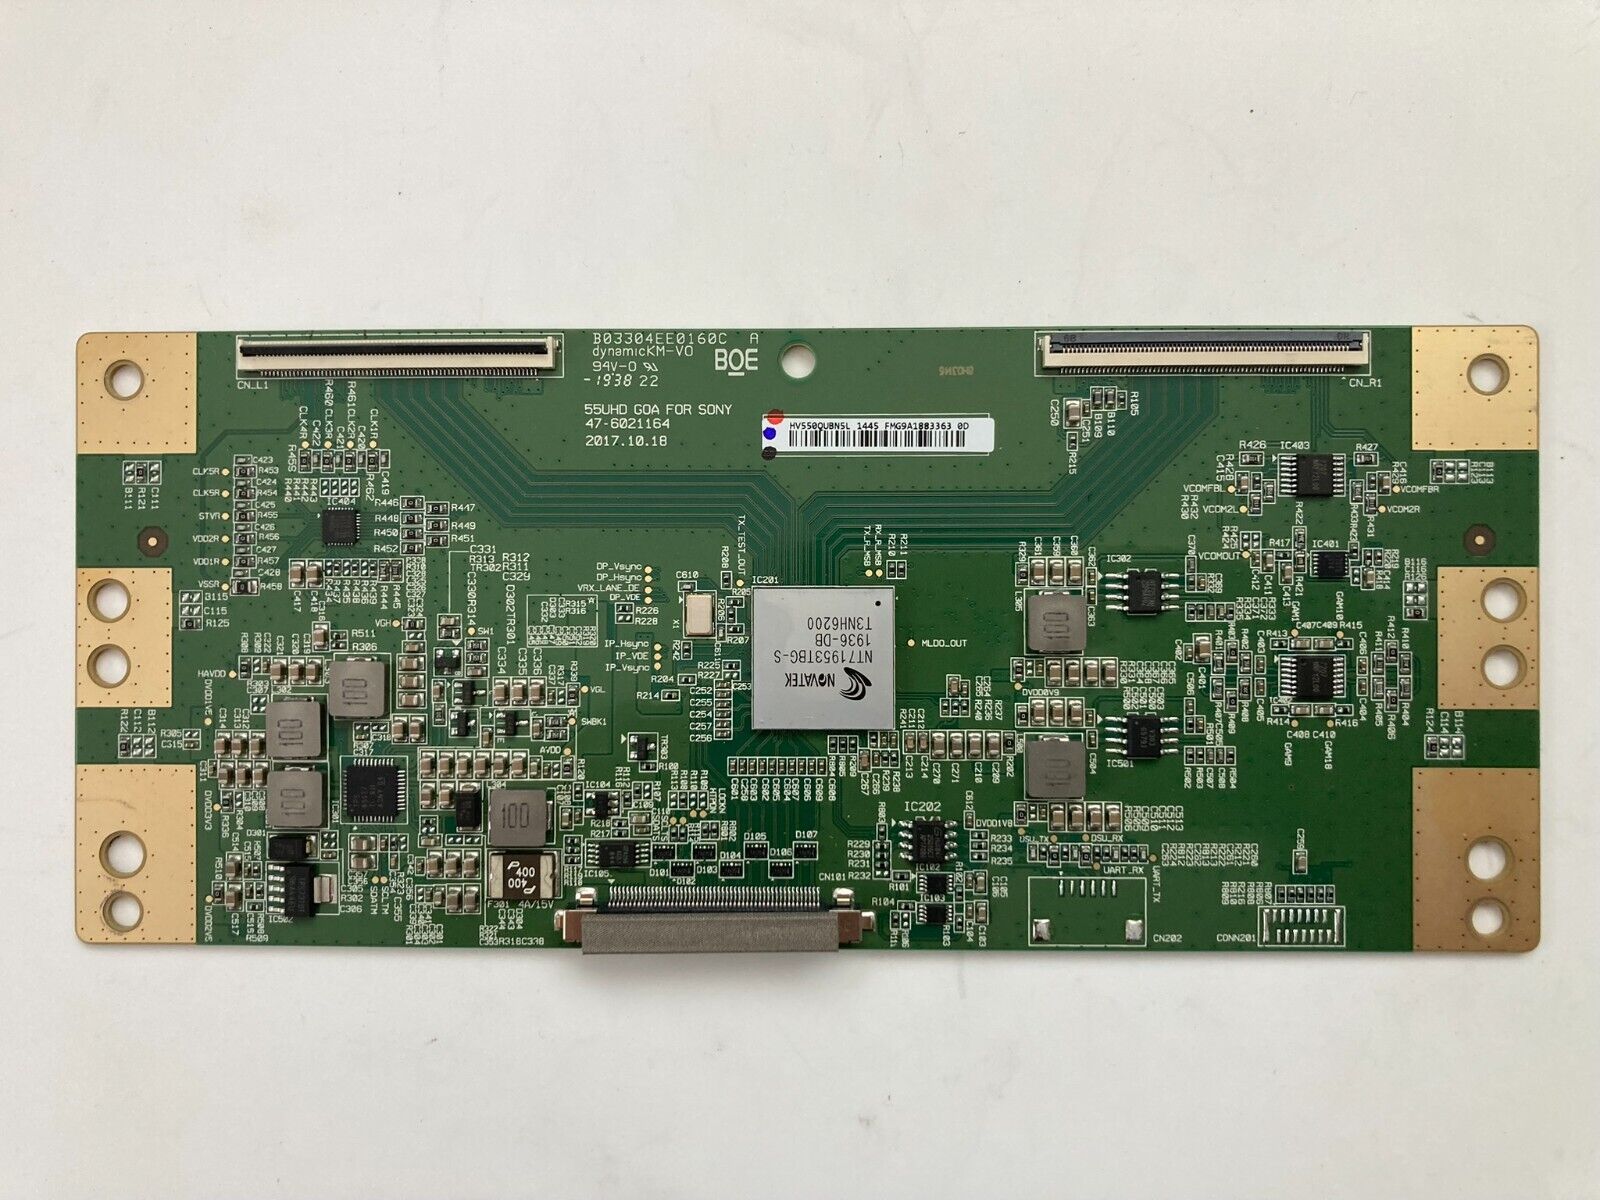 100150711 T-CON(65) HV650QUBN9K, (LCD BOE YM9S065CNO01 HV650QUB-N9K XPCB), 55UHD GOA FOR SONY / KD-65XG8096